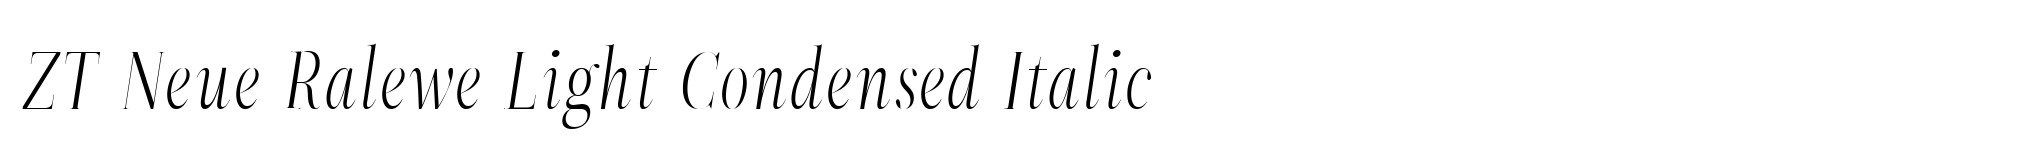 ZT Neue Ralewe Light Condensed Italic image